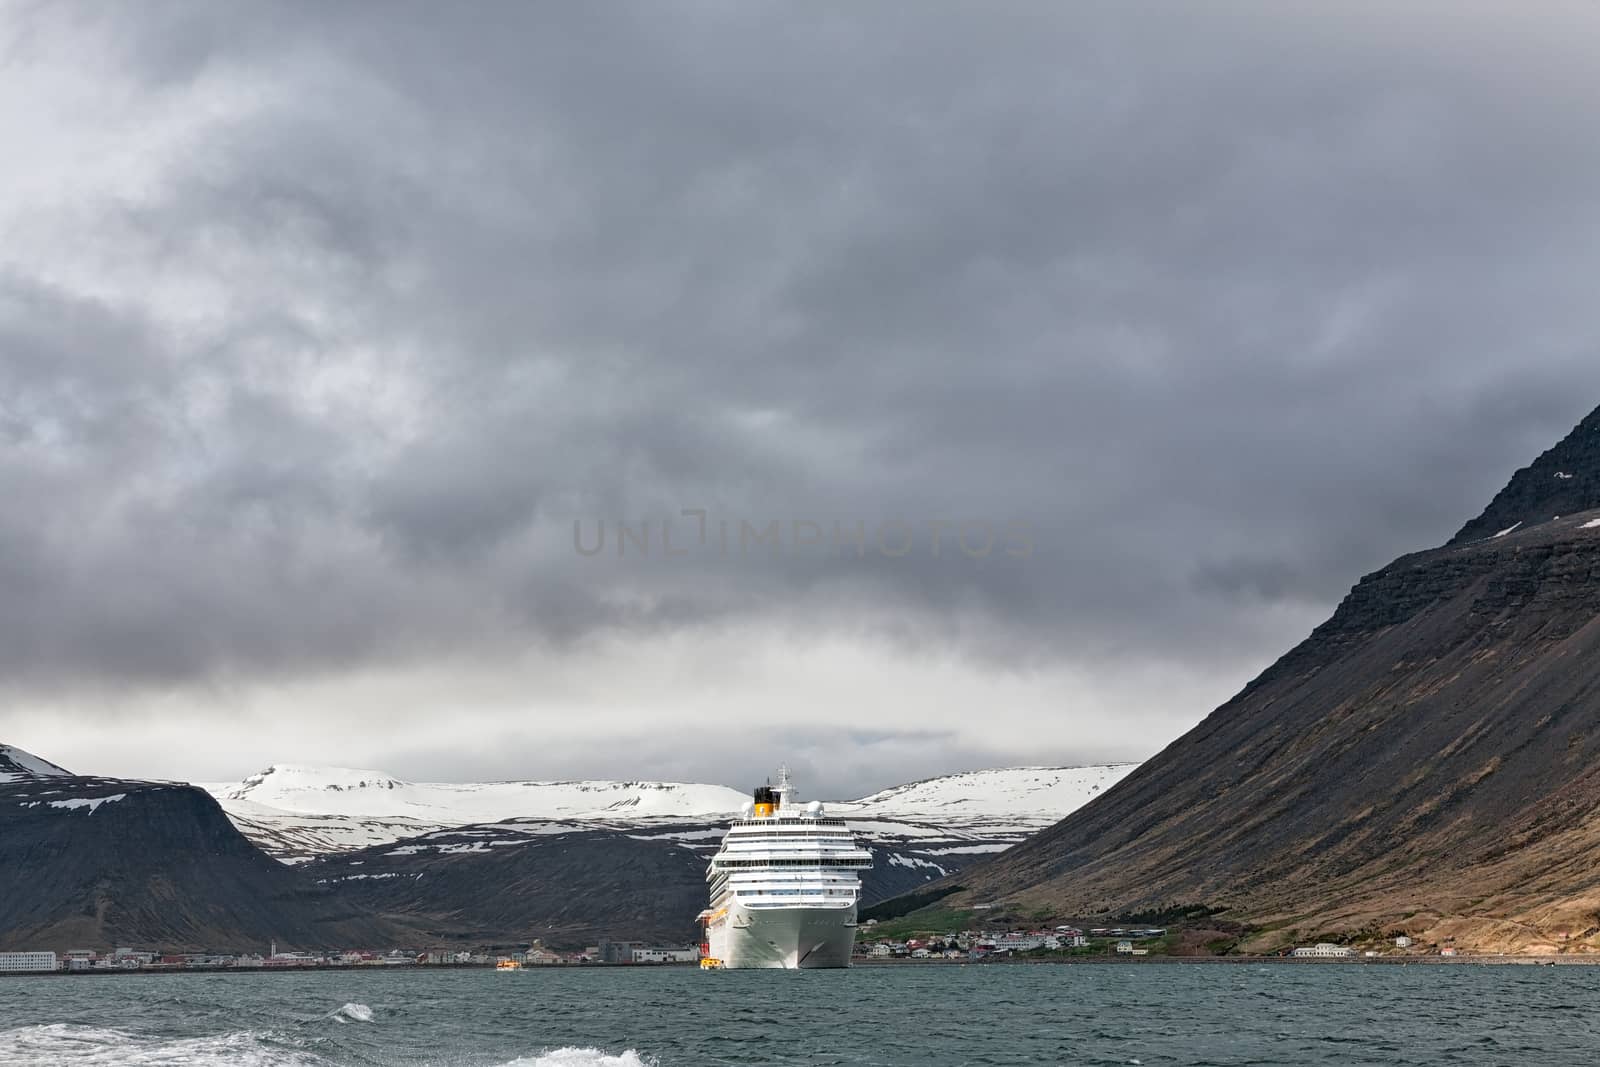 Cruise ship stopped in Isafjordur, Iceland by LuigiMorbidelli